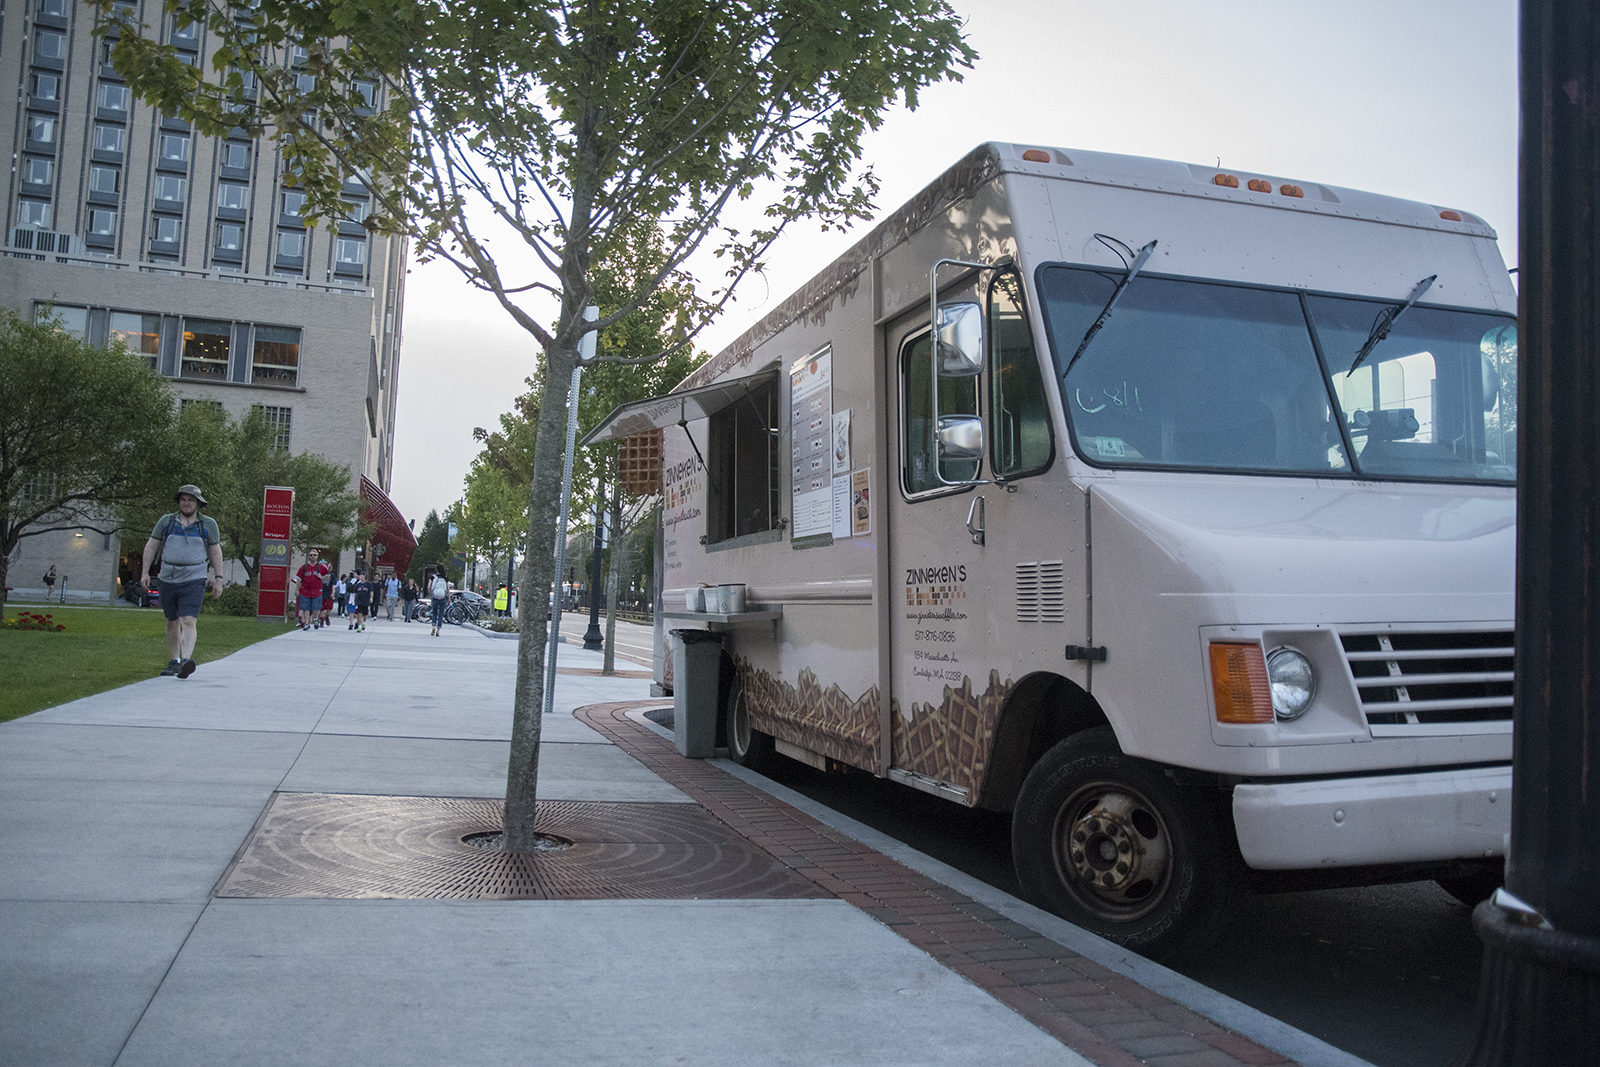 Zinneken's Food truck at boston university